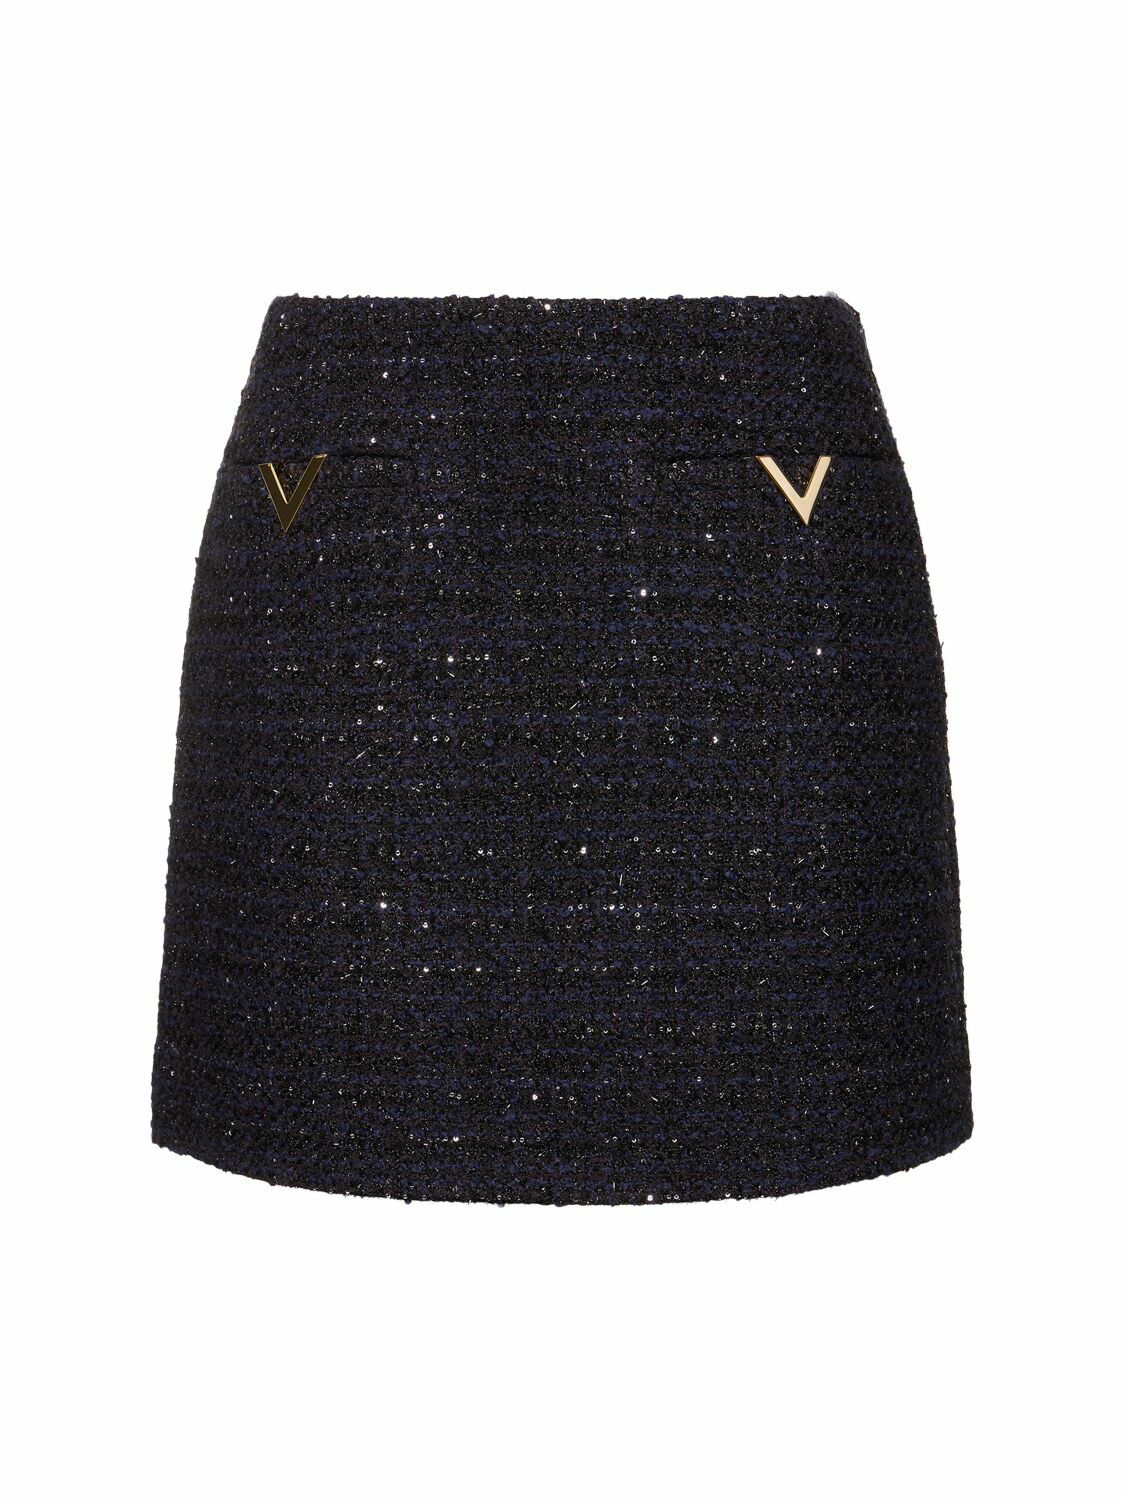 Valentino Black Sequin Miniskirt